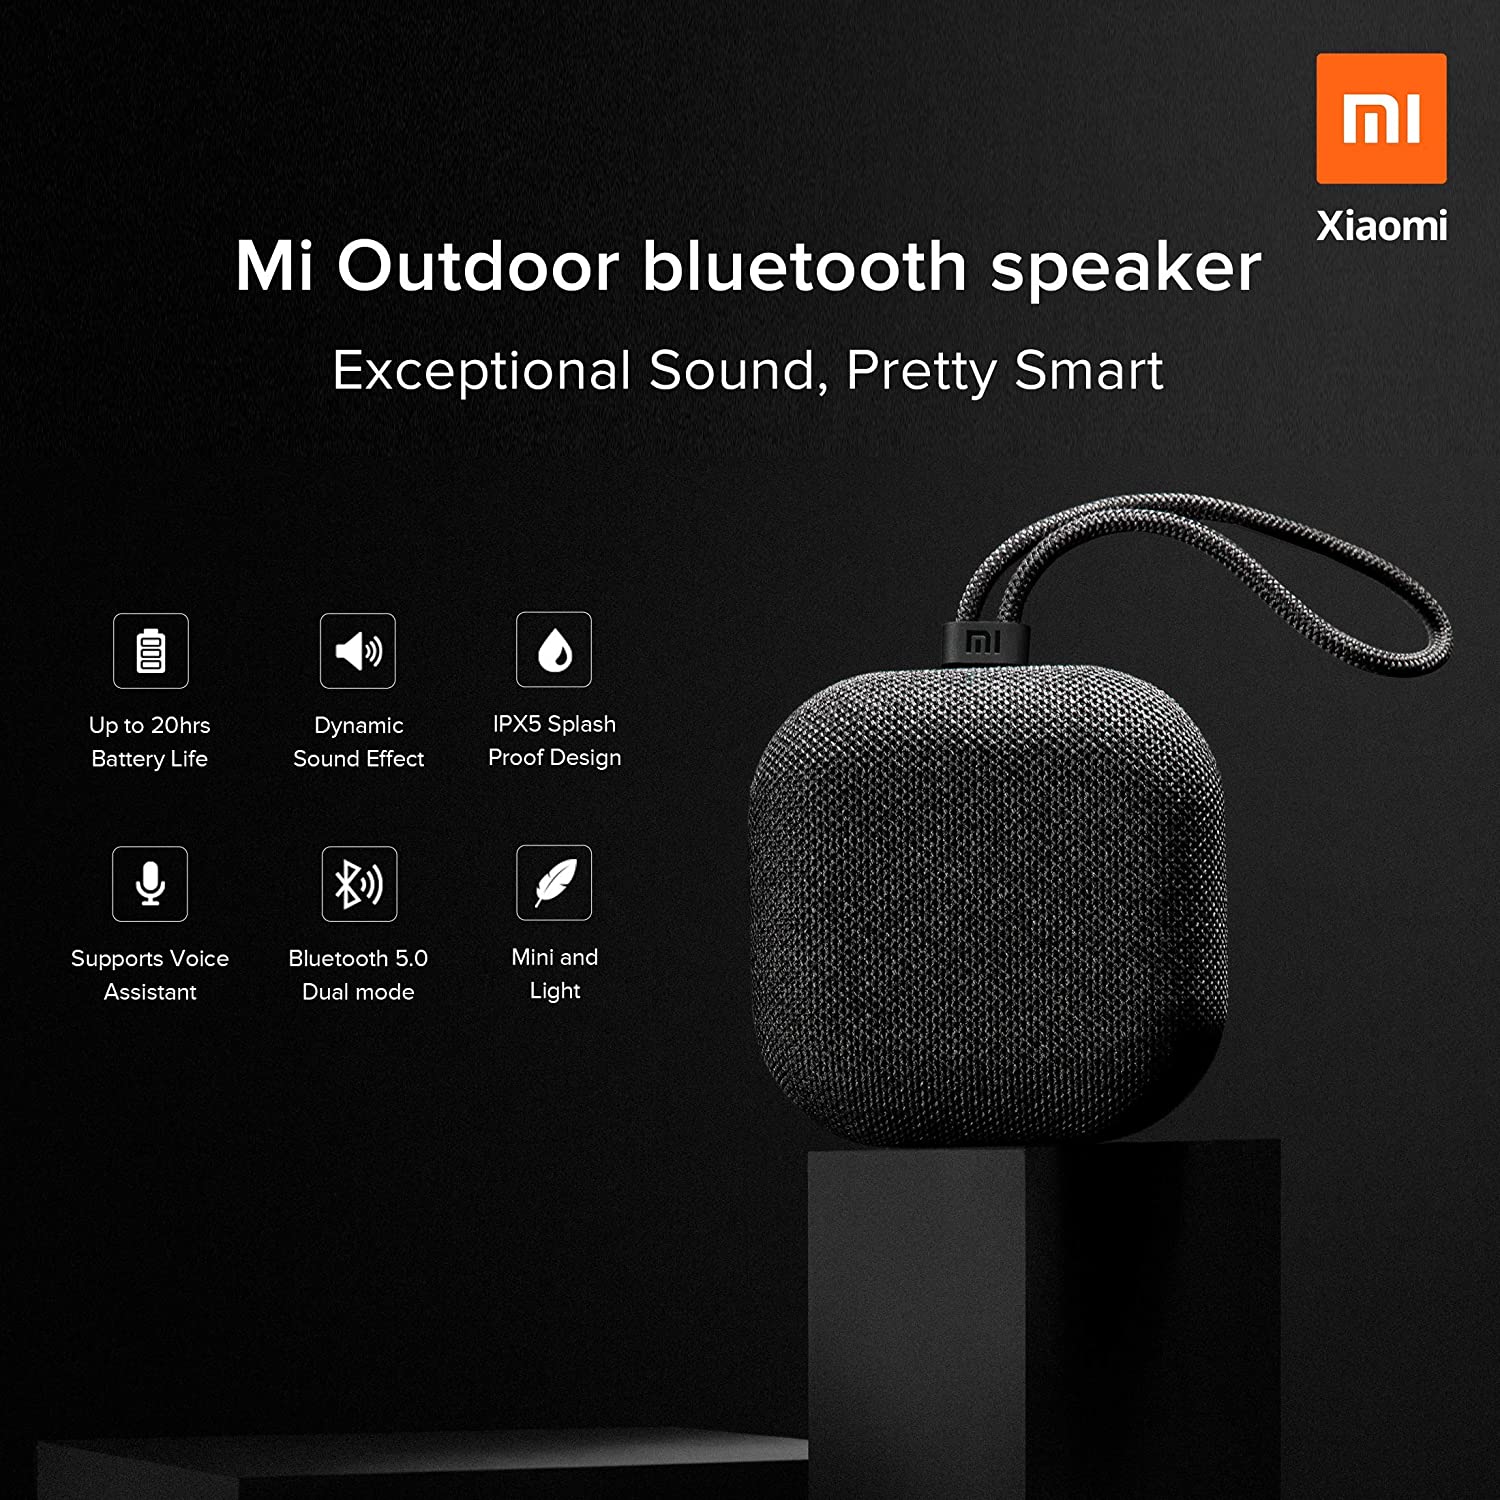 Buy Refurbished Mi Outdoor Bluetooth Speaker (5W) Online in India at Lowest  Price